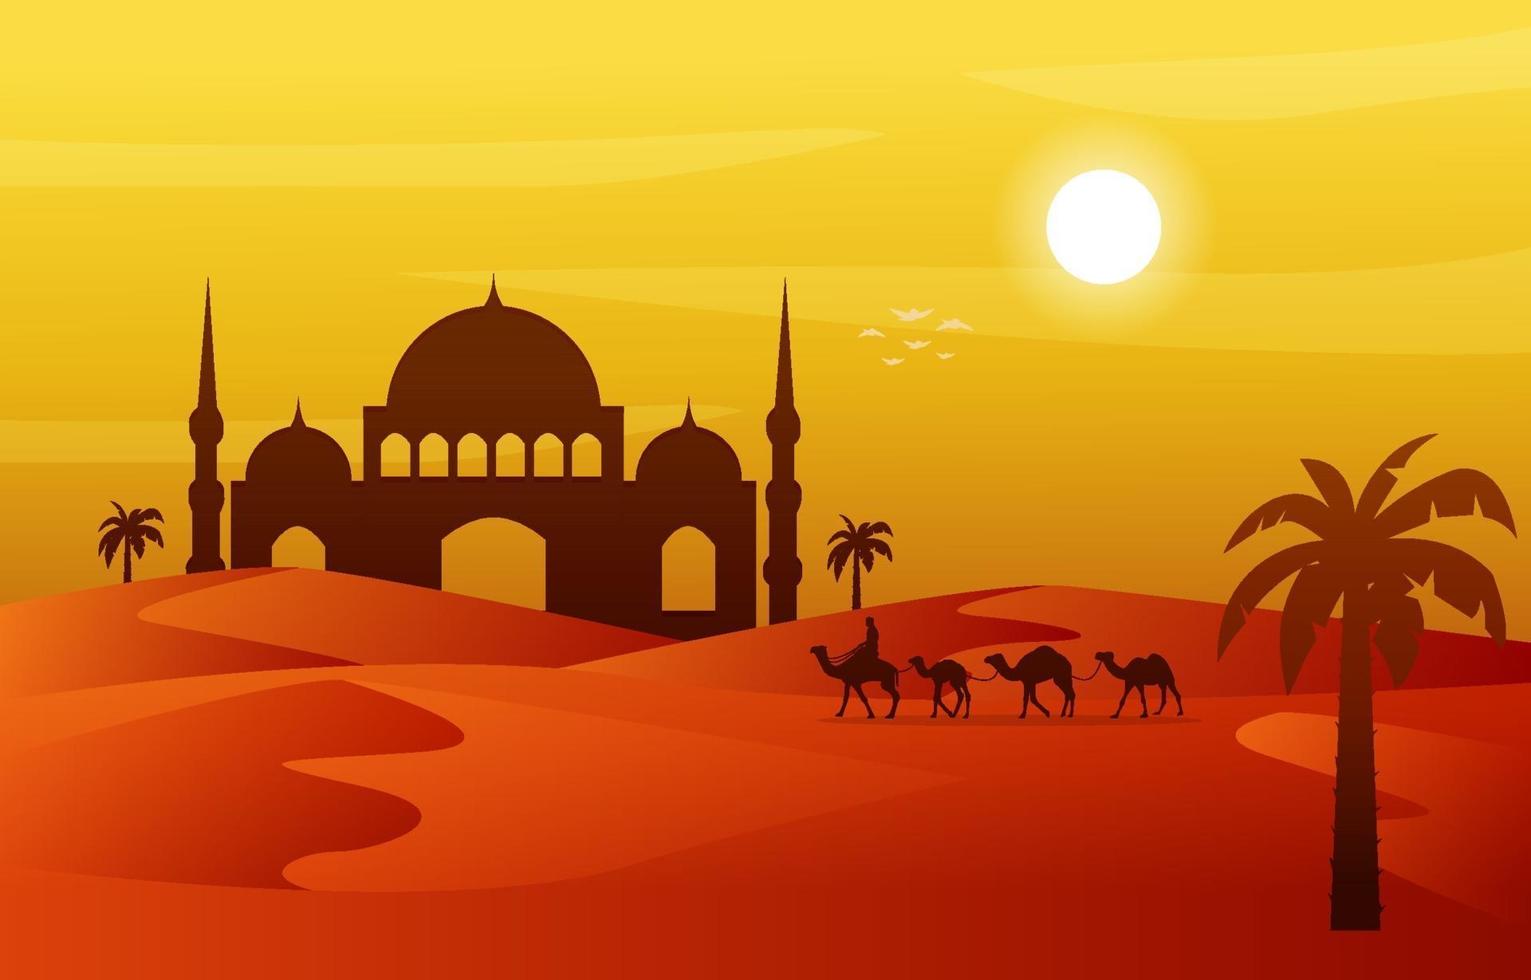 Mosque Arabic Desert Muslim Eid Mubarak Islamic Culture Illustration vector